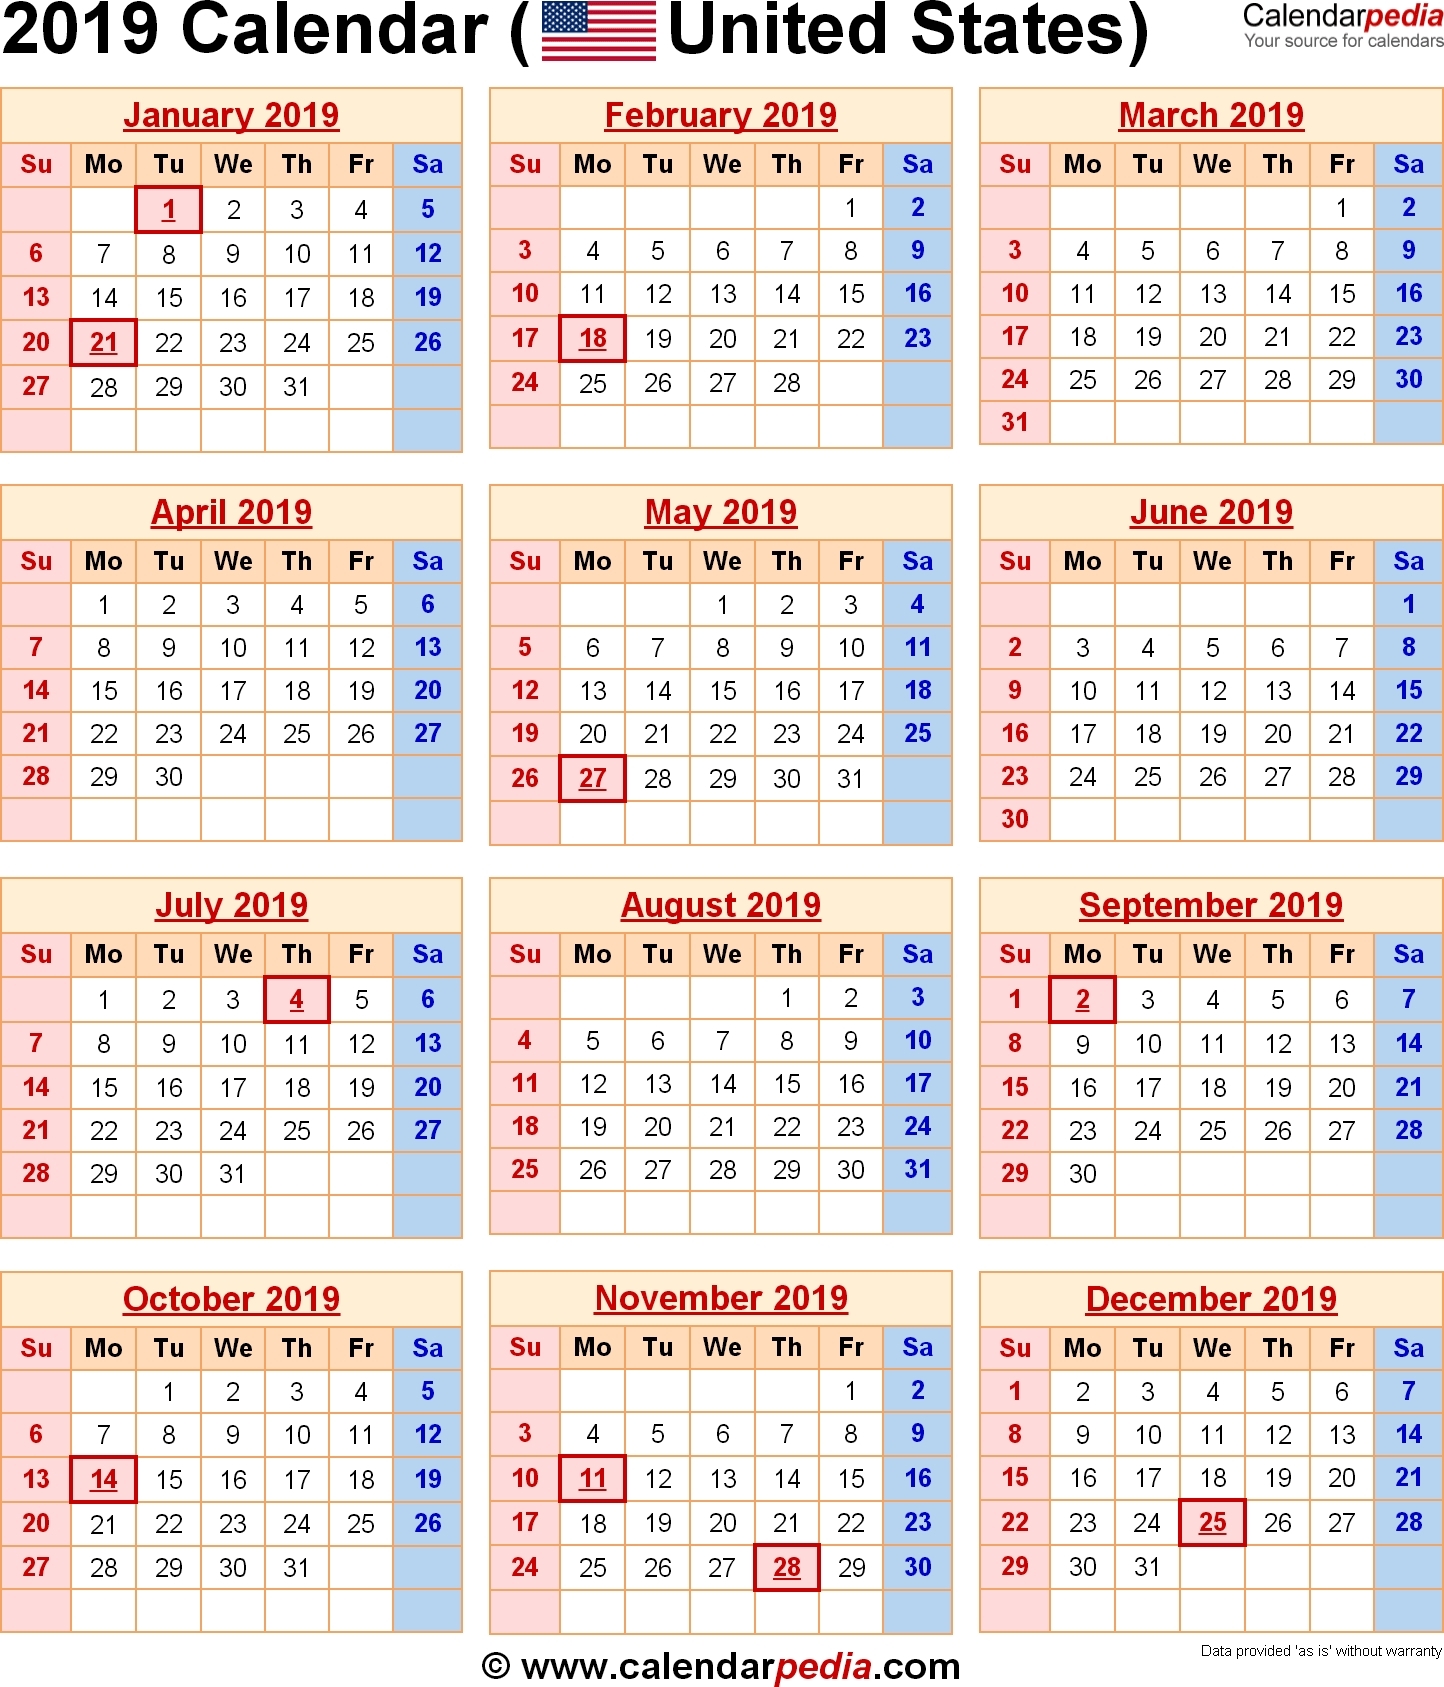 Image Result For 2019 Calendar With Holidays Usa | A Today Holiday Calendar Holidays For Today